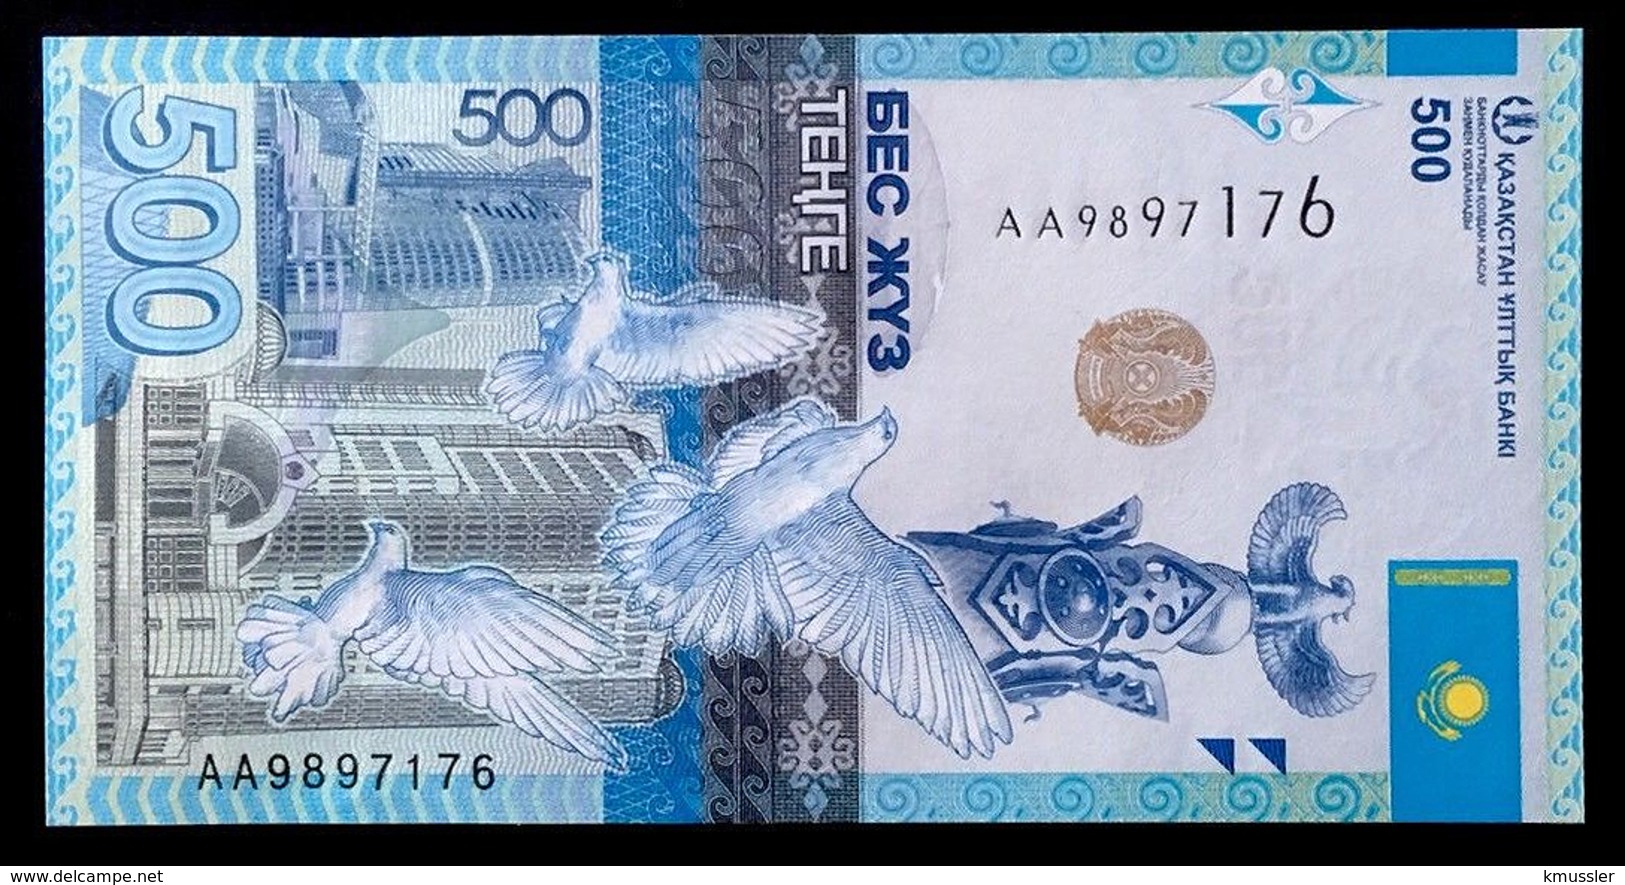 # # # Banknote Kasachstan 500 Tenge UNC # # # - Kazakhstán